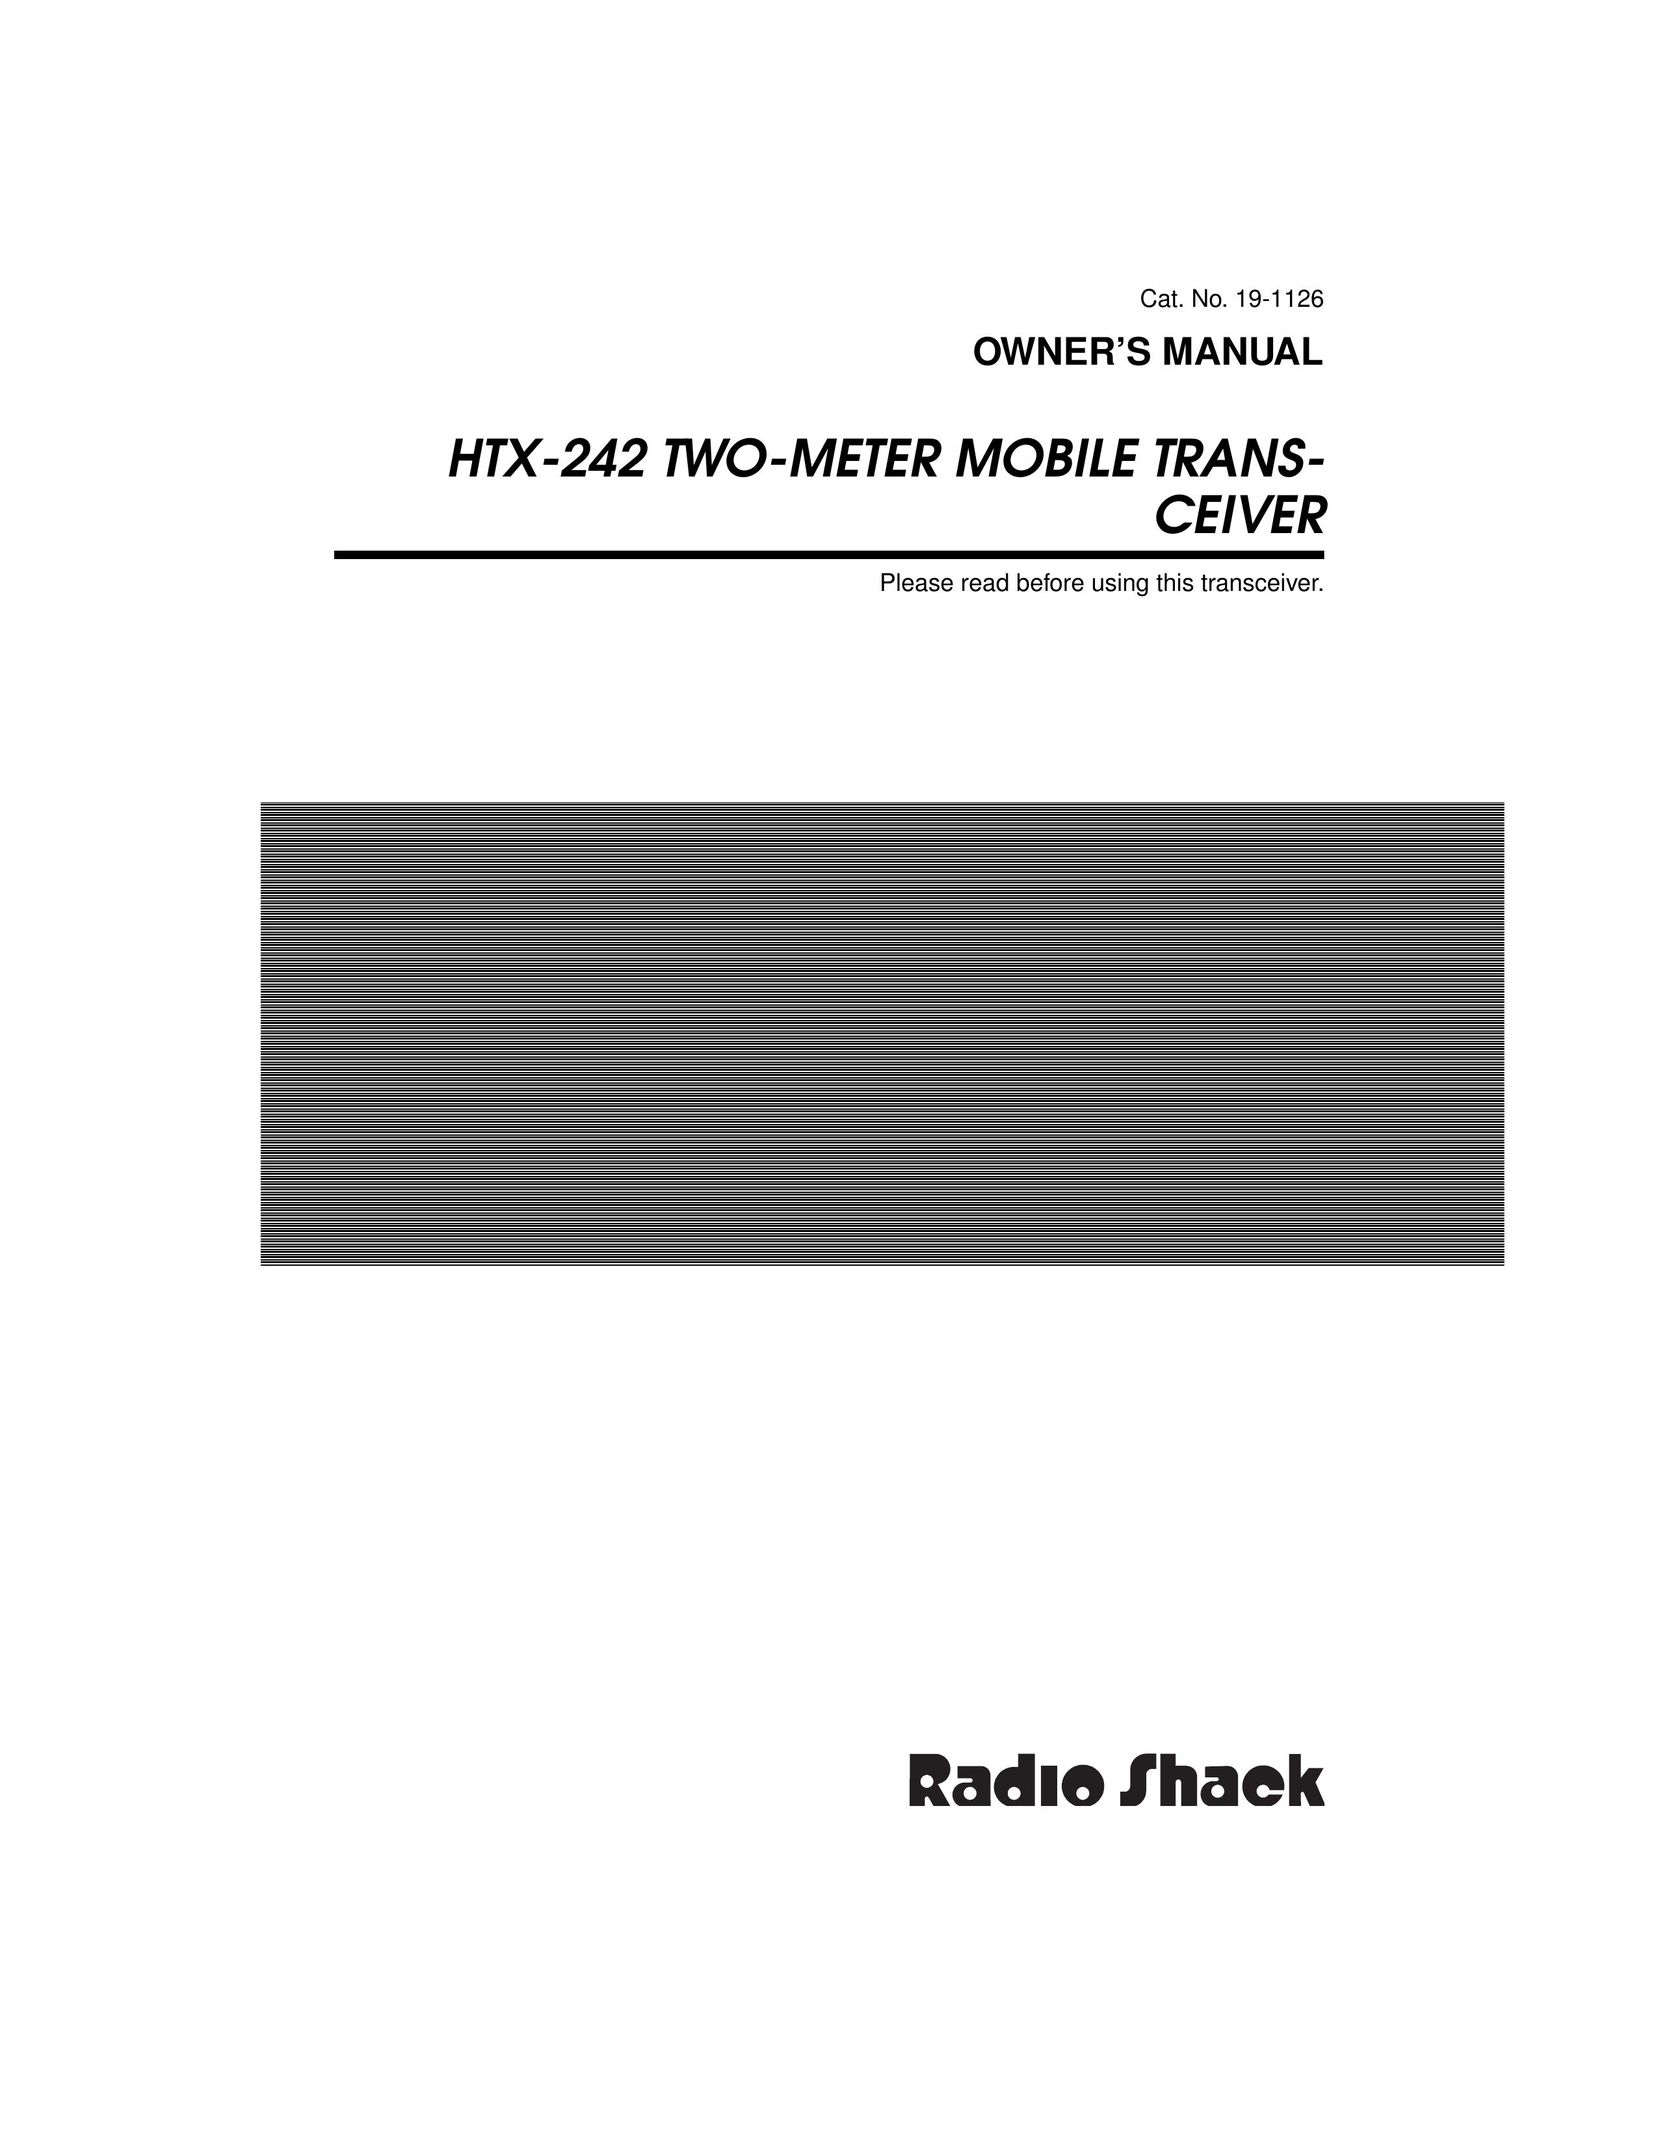 Radio Shack HTX-242 Radio User Manual